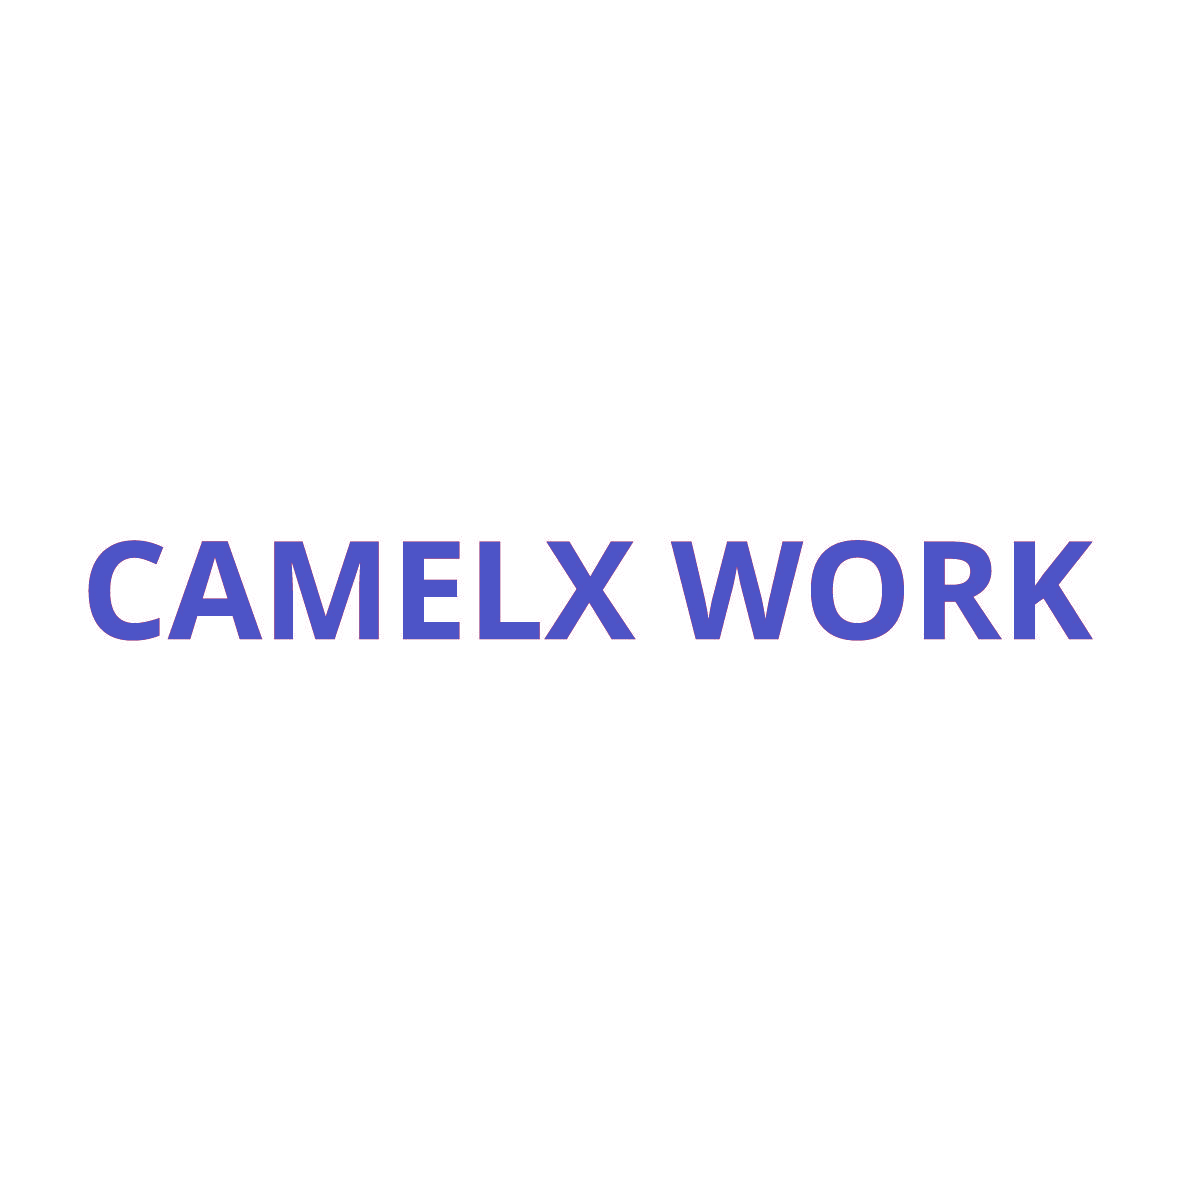 CAMELX WORK